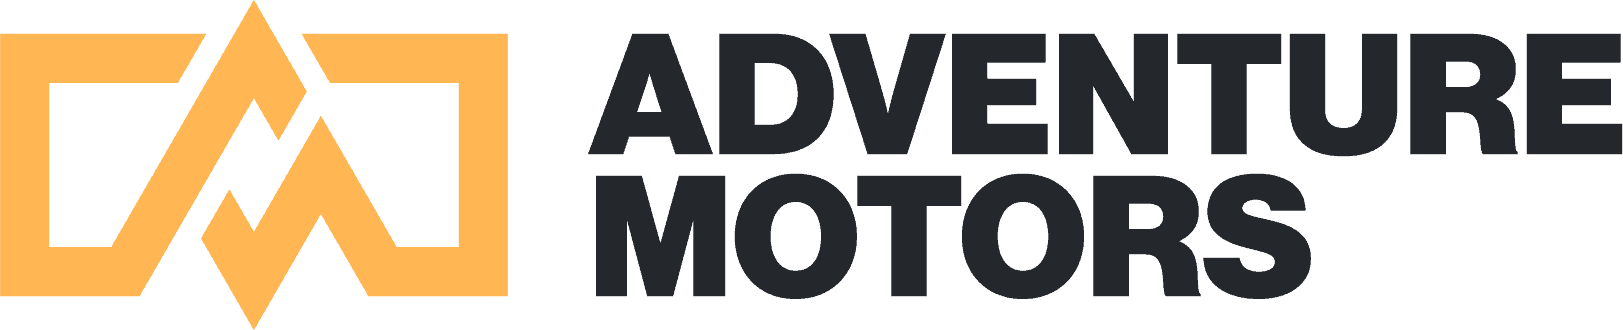 Adventure Motors